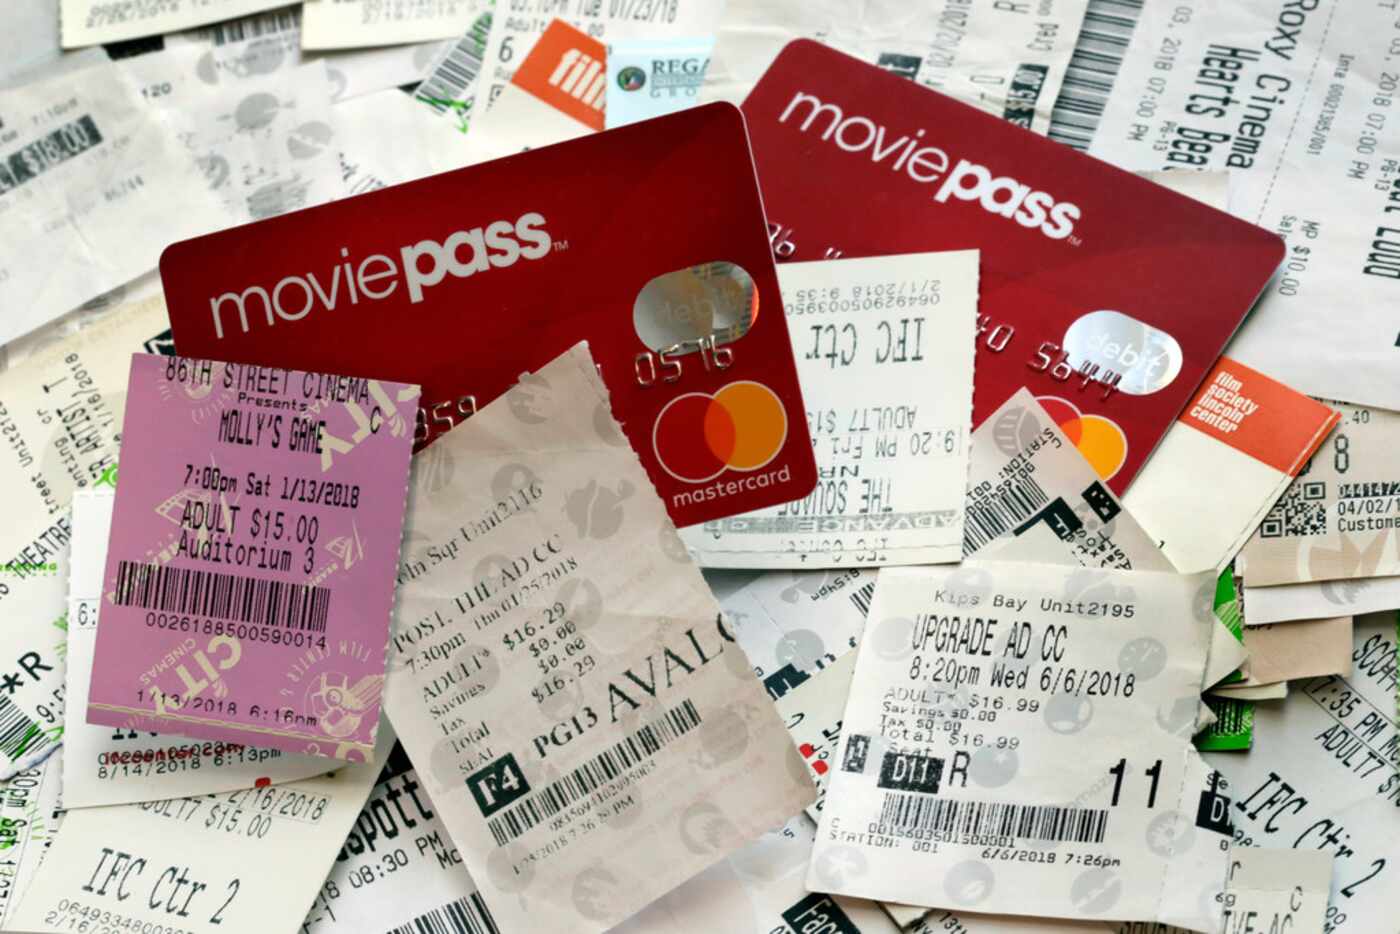 Movie Pass debit cards.